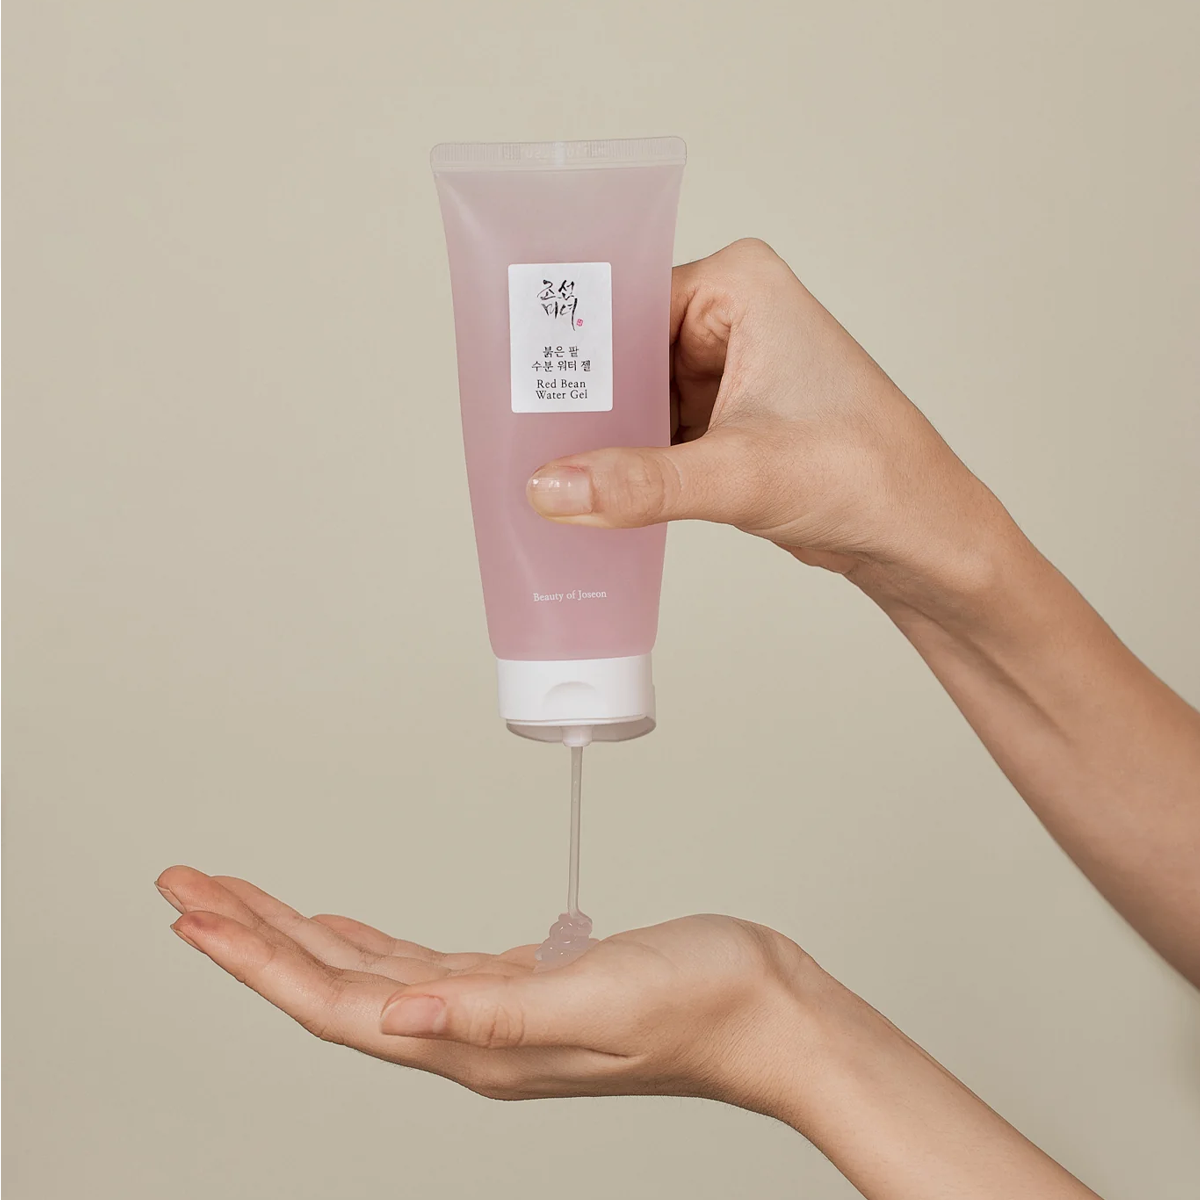 Beauty of Joseon - Red Bean Water Gel Moisture Moisturizing - Korean Skincare Moisturizer Cream Skin Repair Hydrating